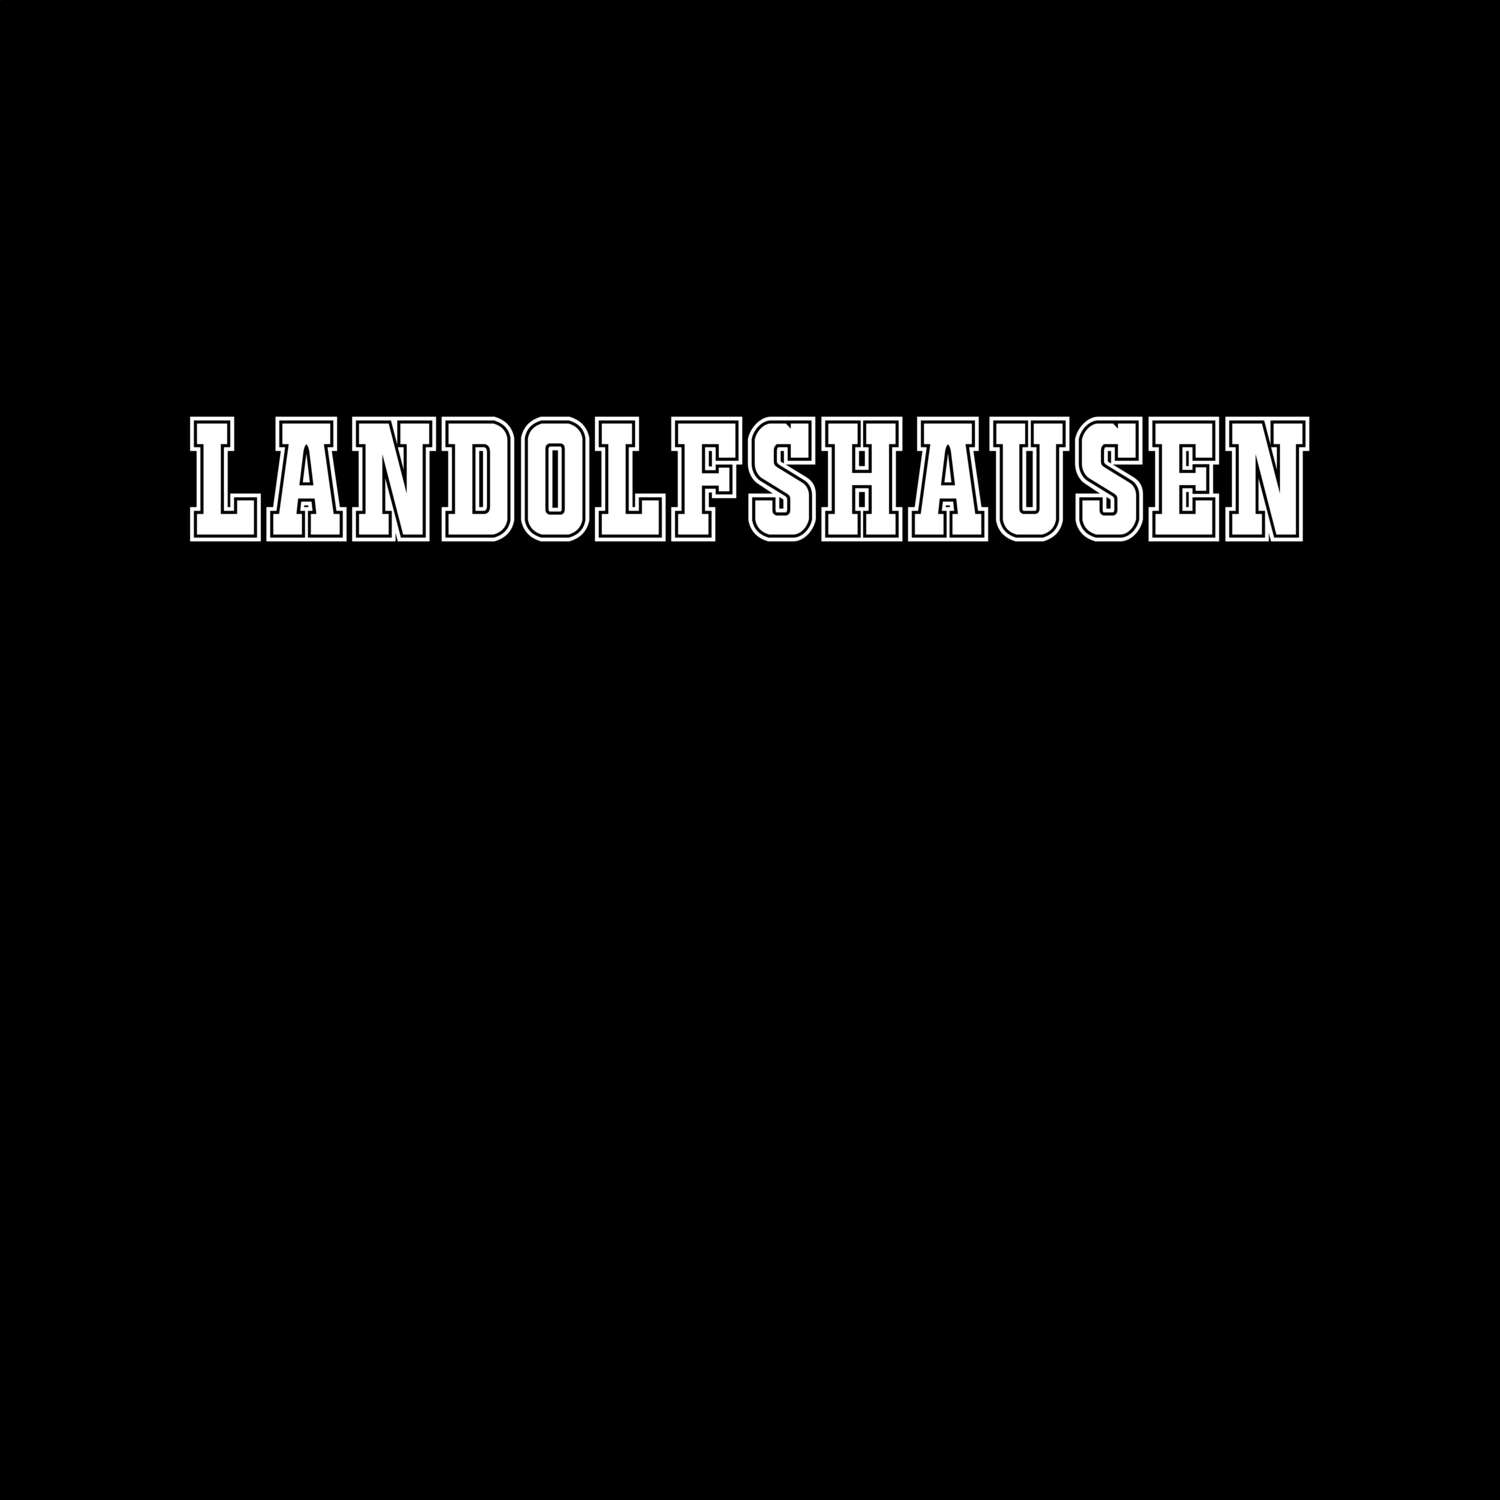 Landolfshausen T-Shirt »Classic«